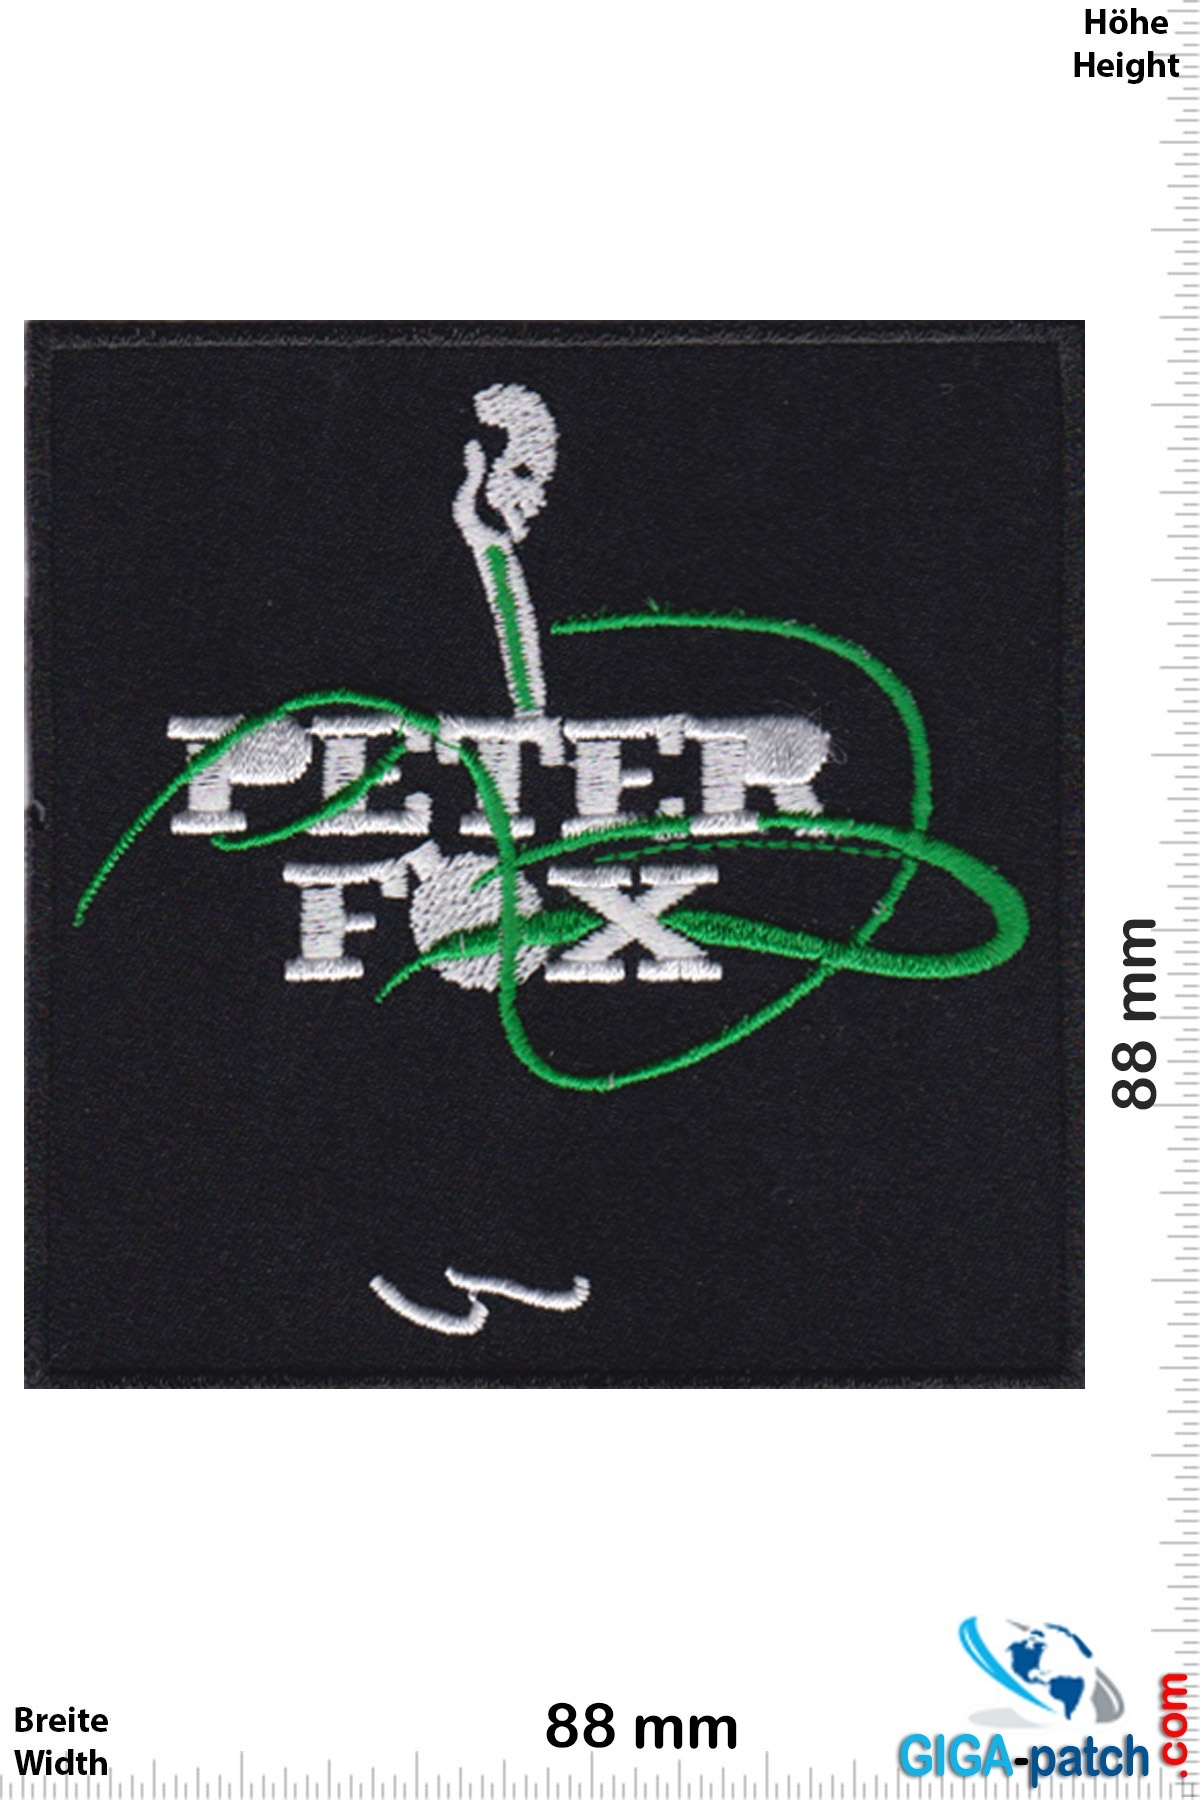 Peter Fox - Reggae  Hip-Hop